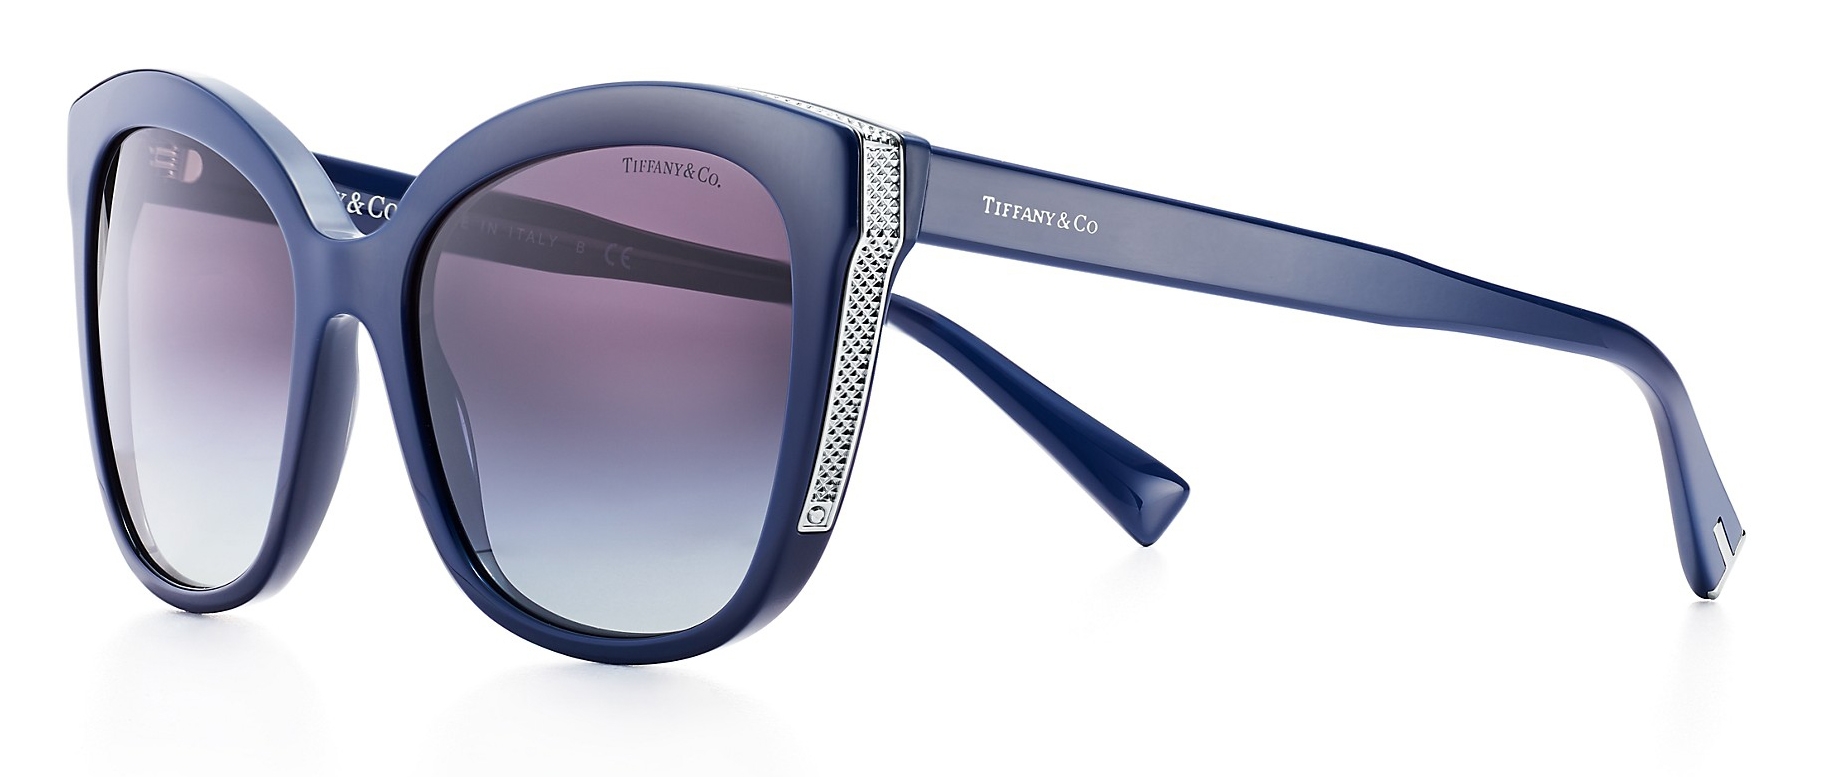 tiffany diamond point sunglasses